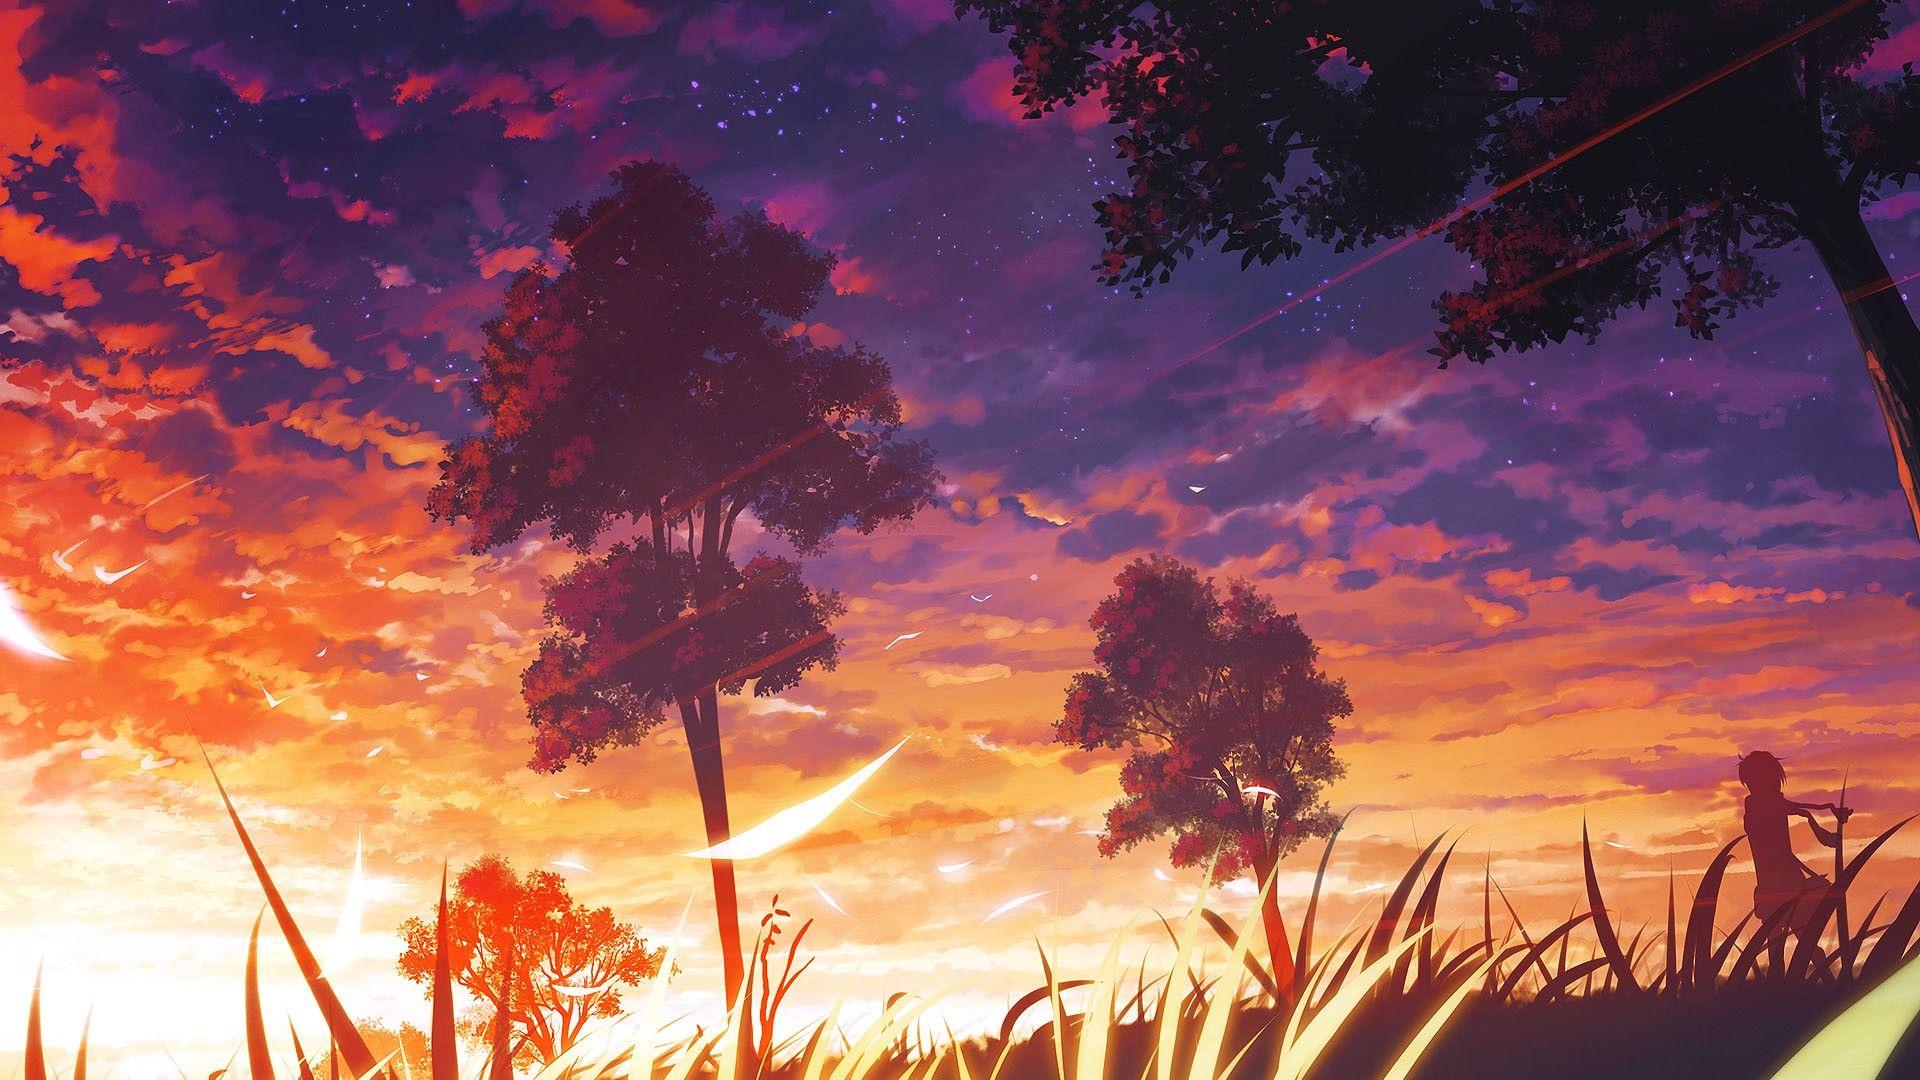 Anime Phone Photo HD. Anime scenery wallpaper, Scenery wallpaper, Anime scenery